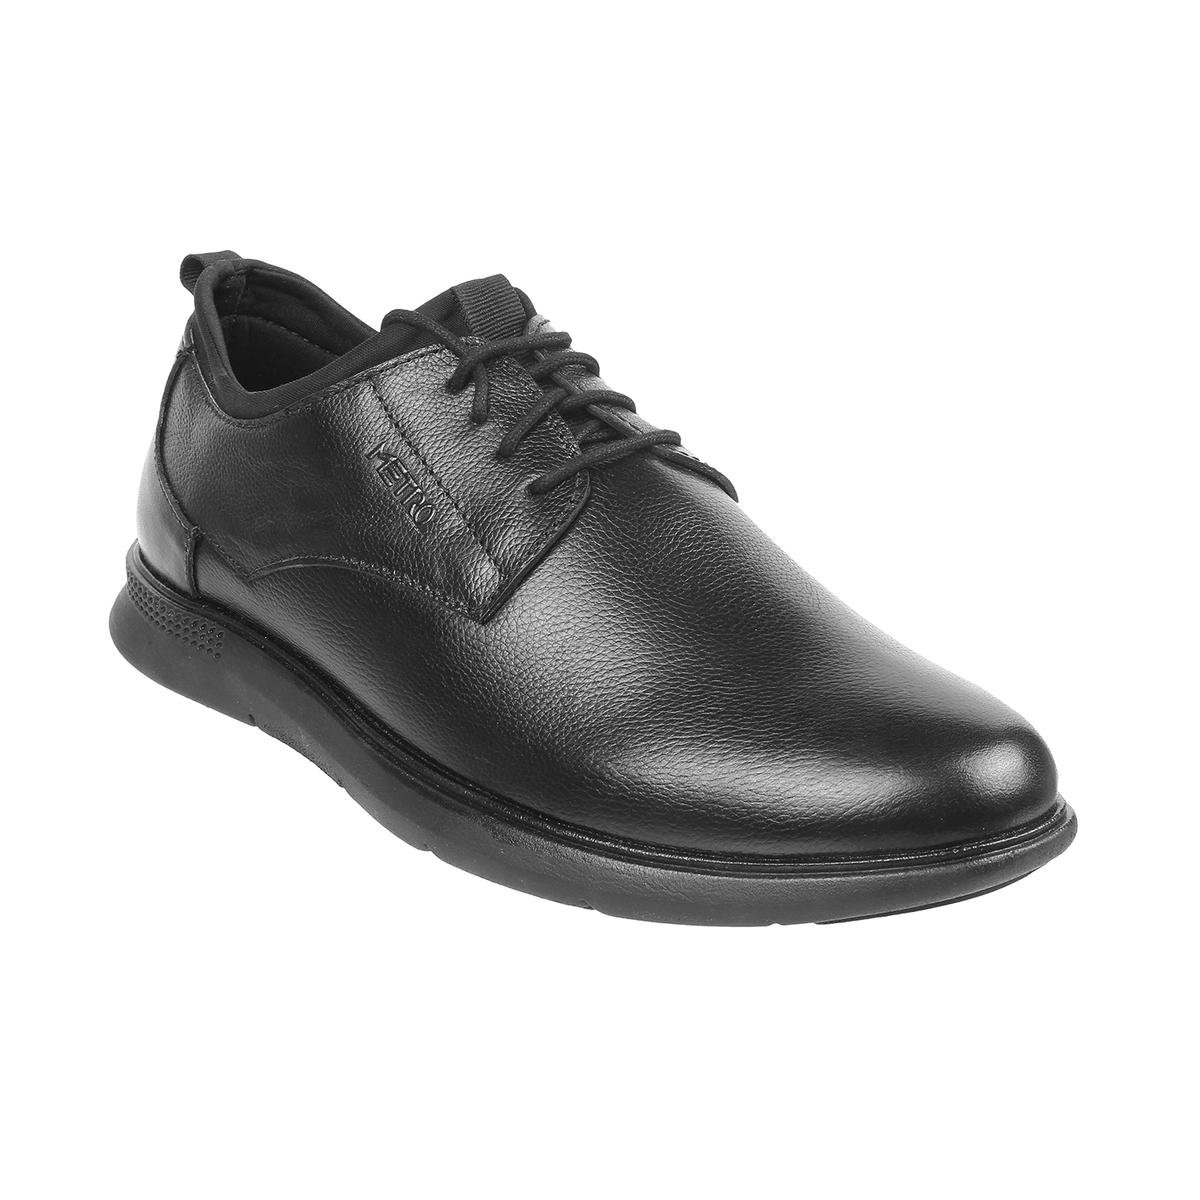 Buy Men Black Casual Lace Up Online | SKU: 71-28-11-40-Metro Shoes